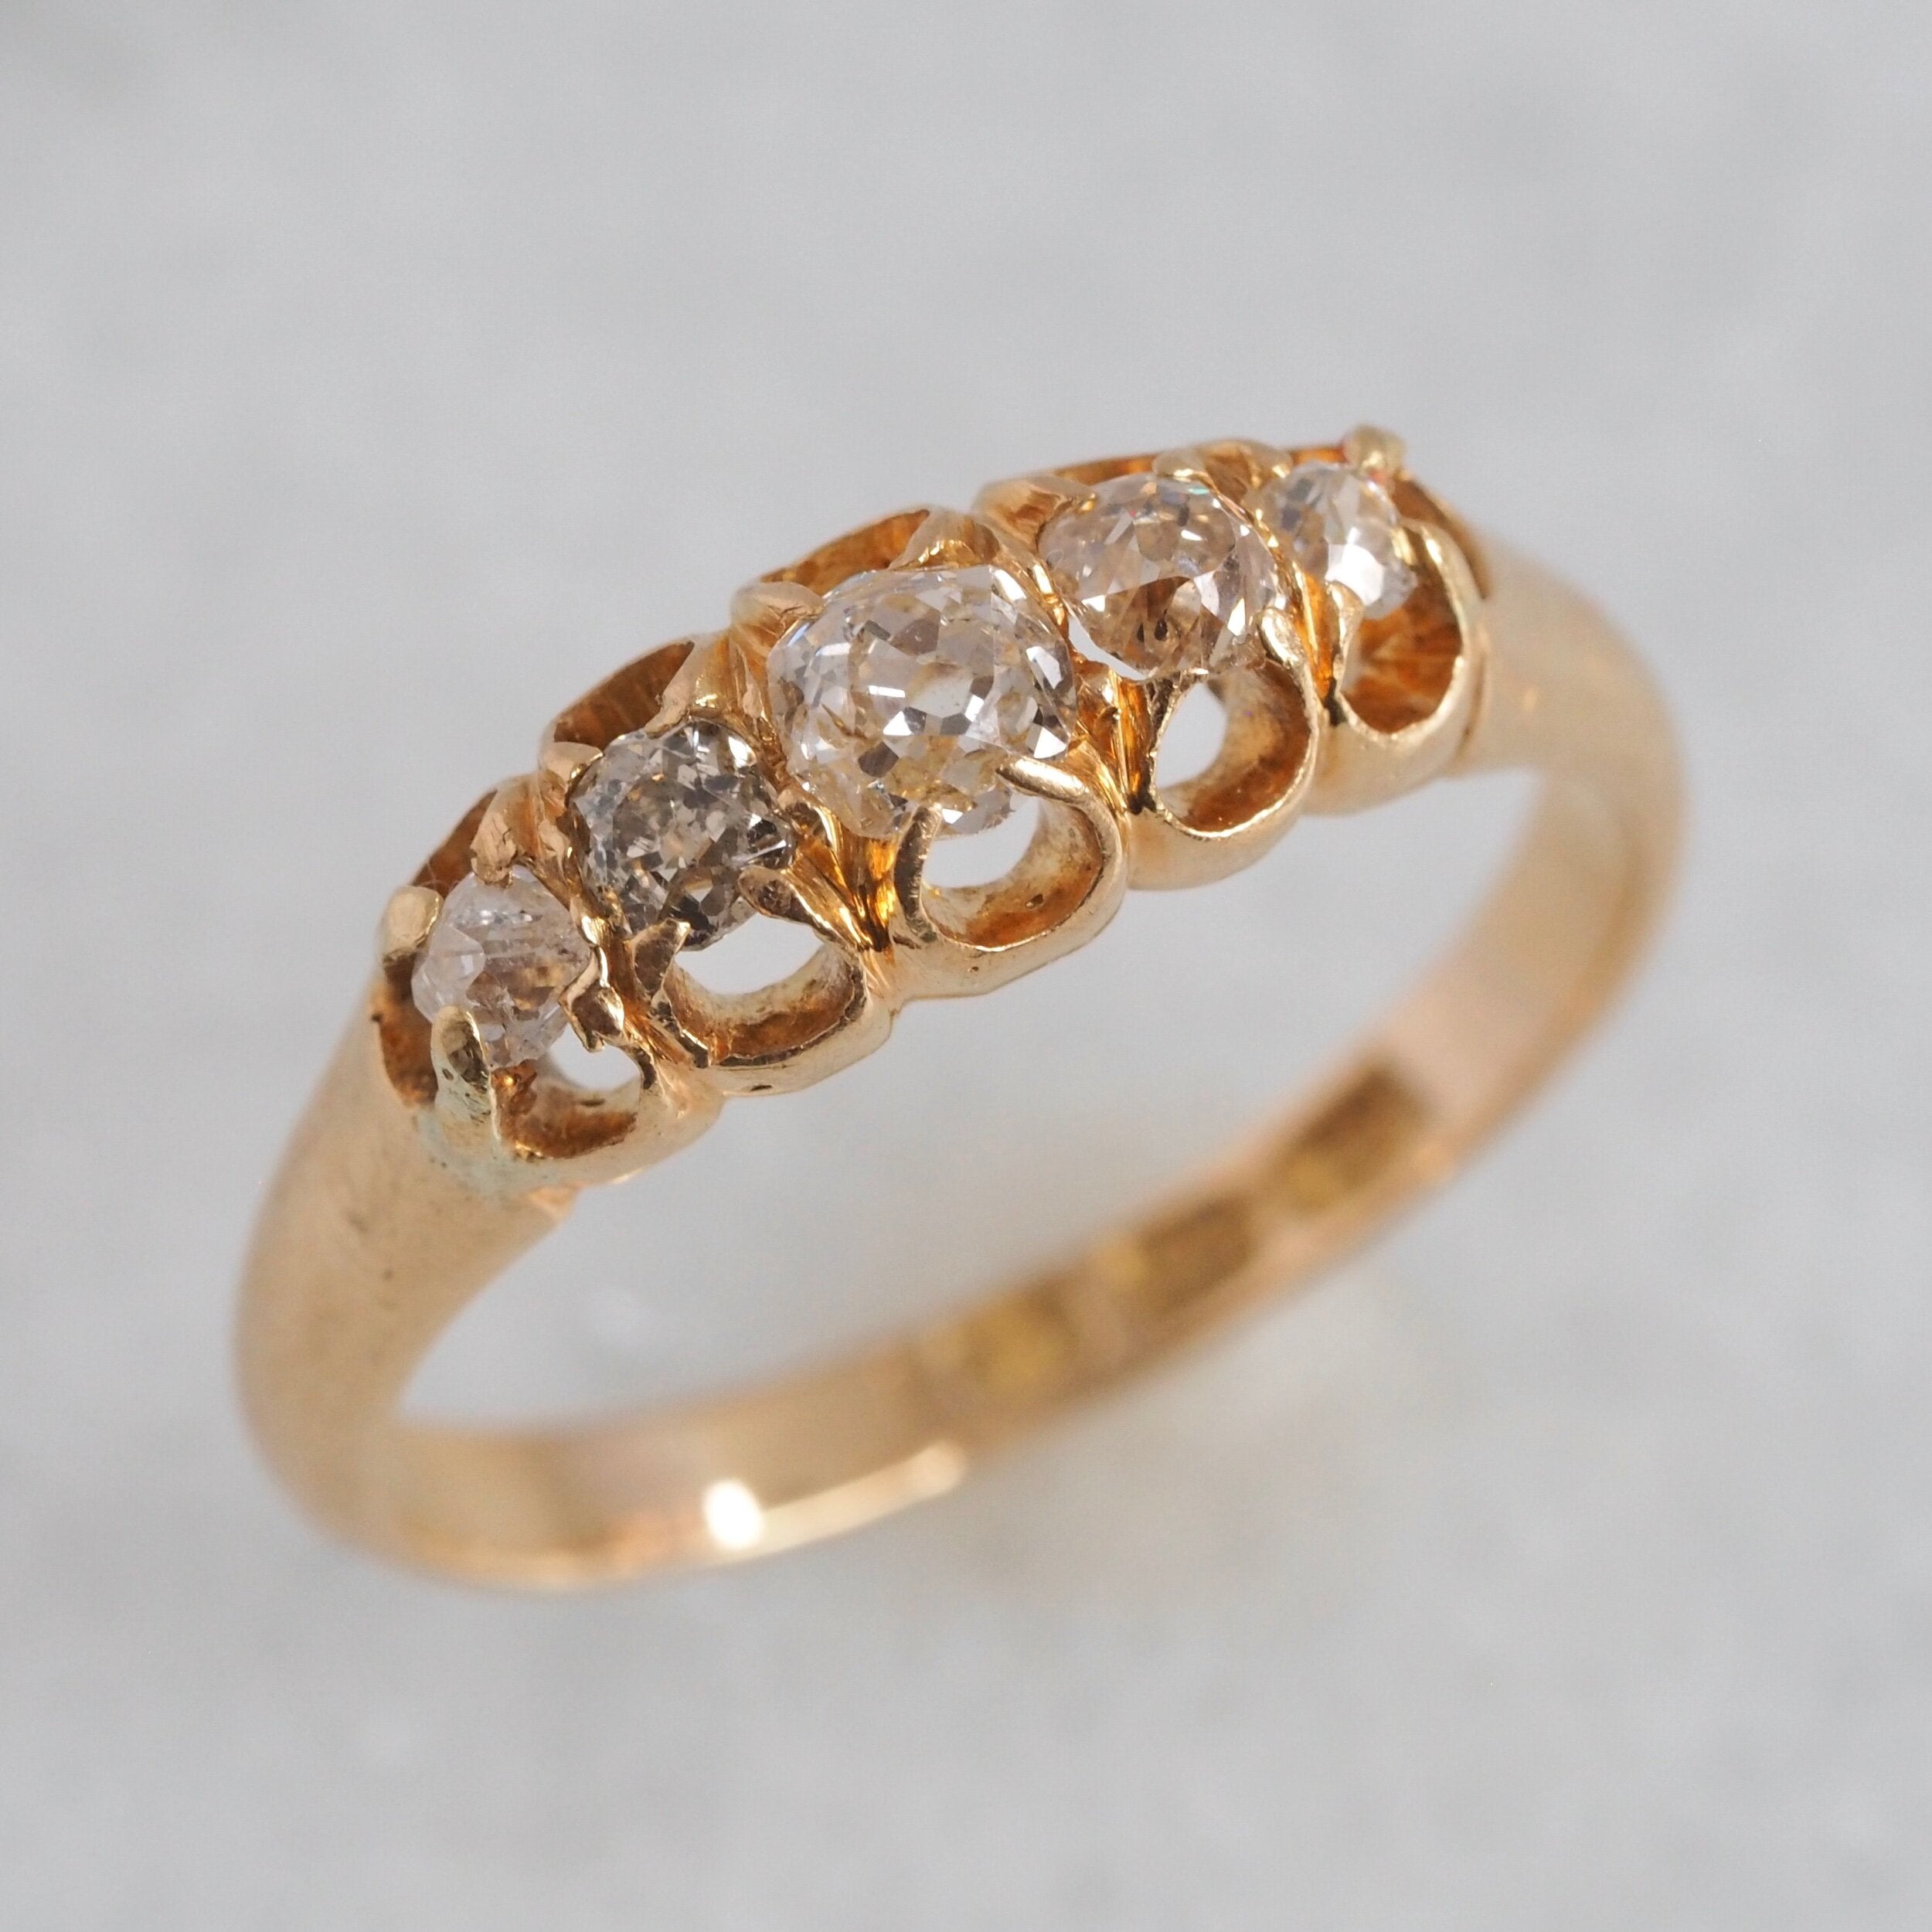 Antique English 18k Old Mine Cut and Single Cut Five Stone Half Hoop Diamond Ring